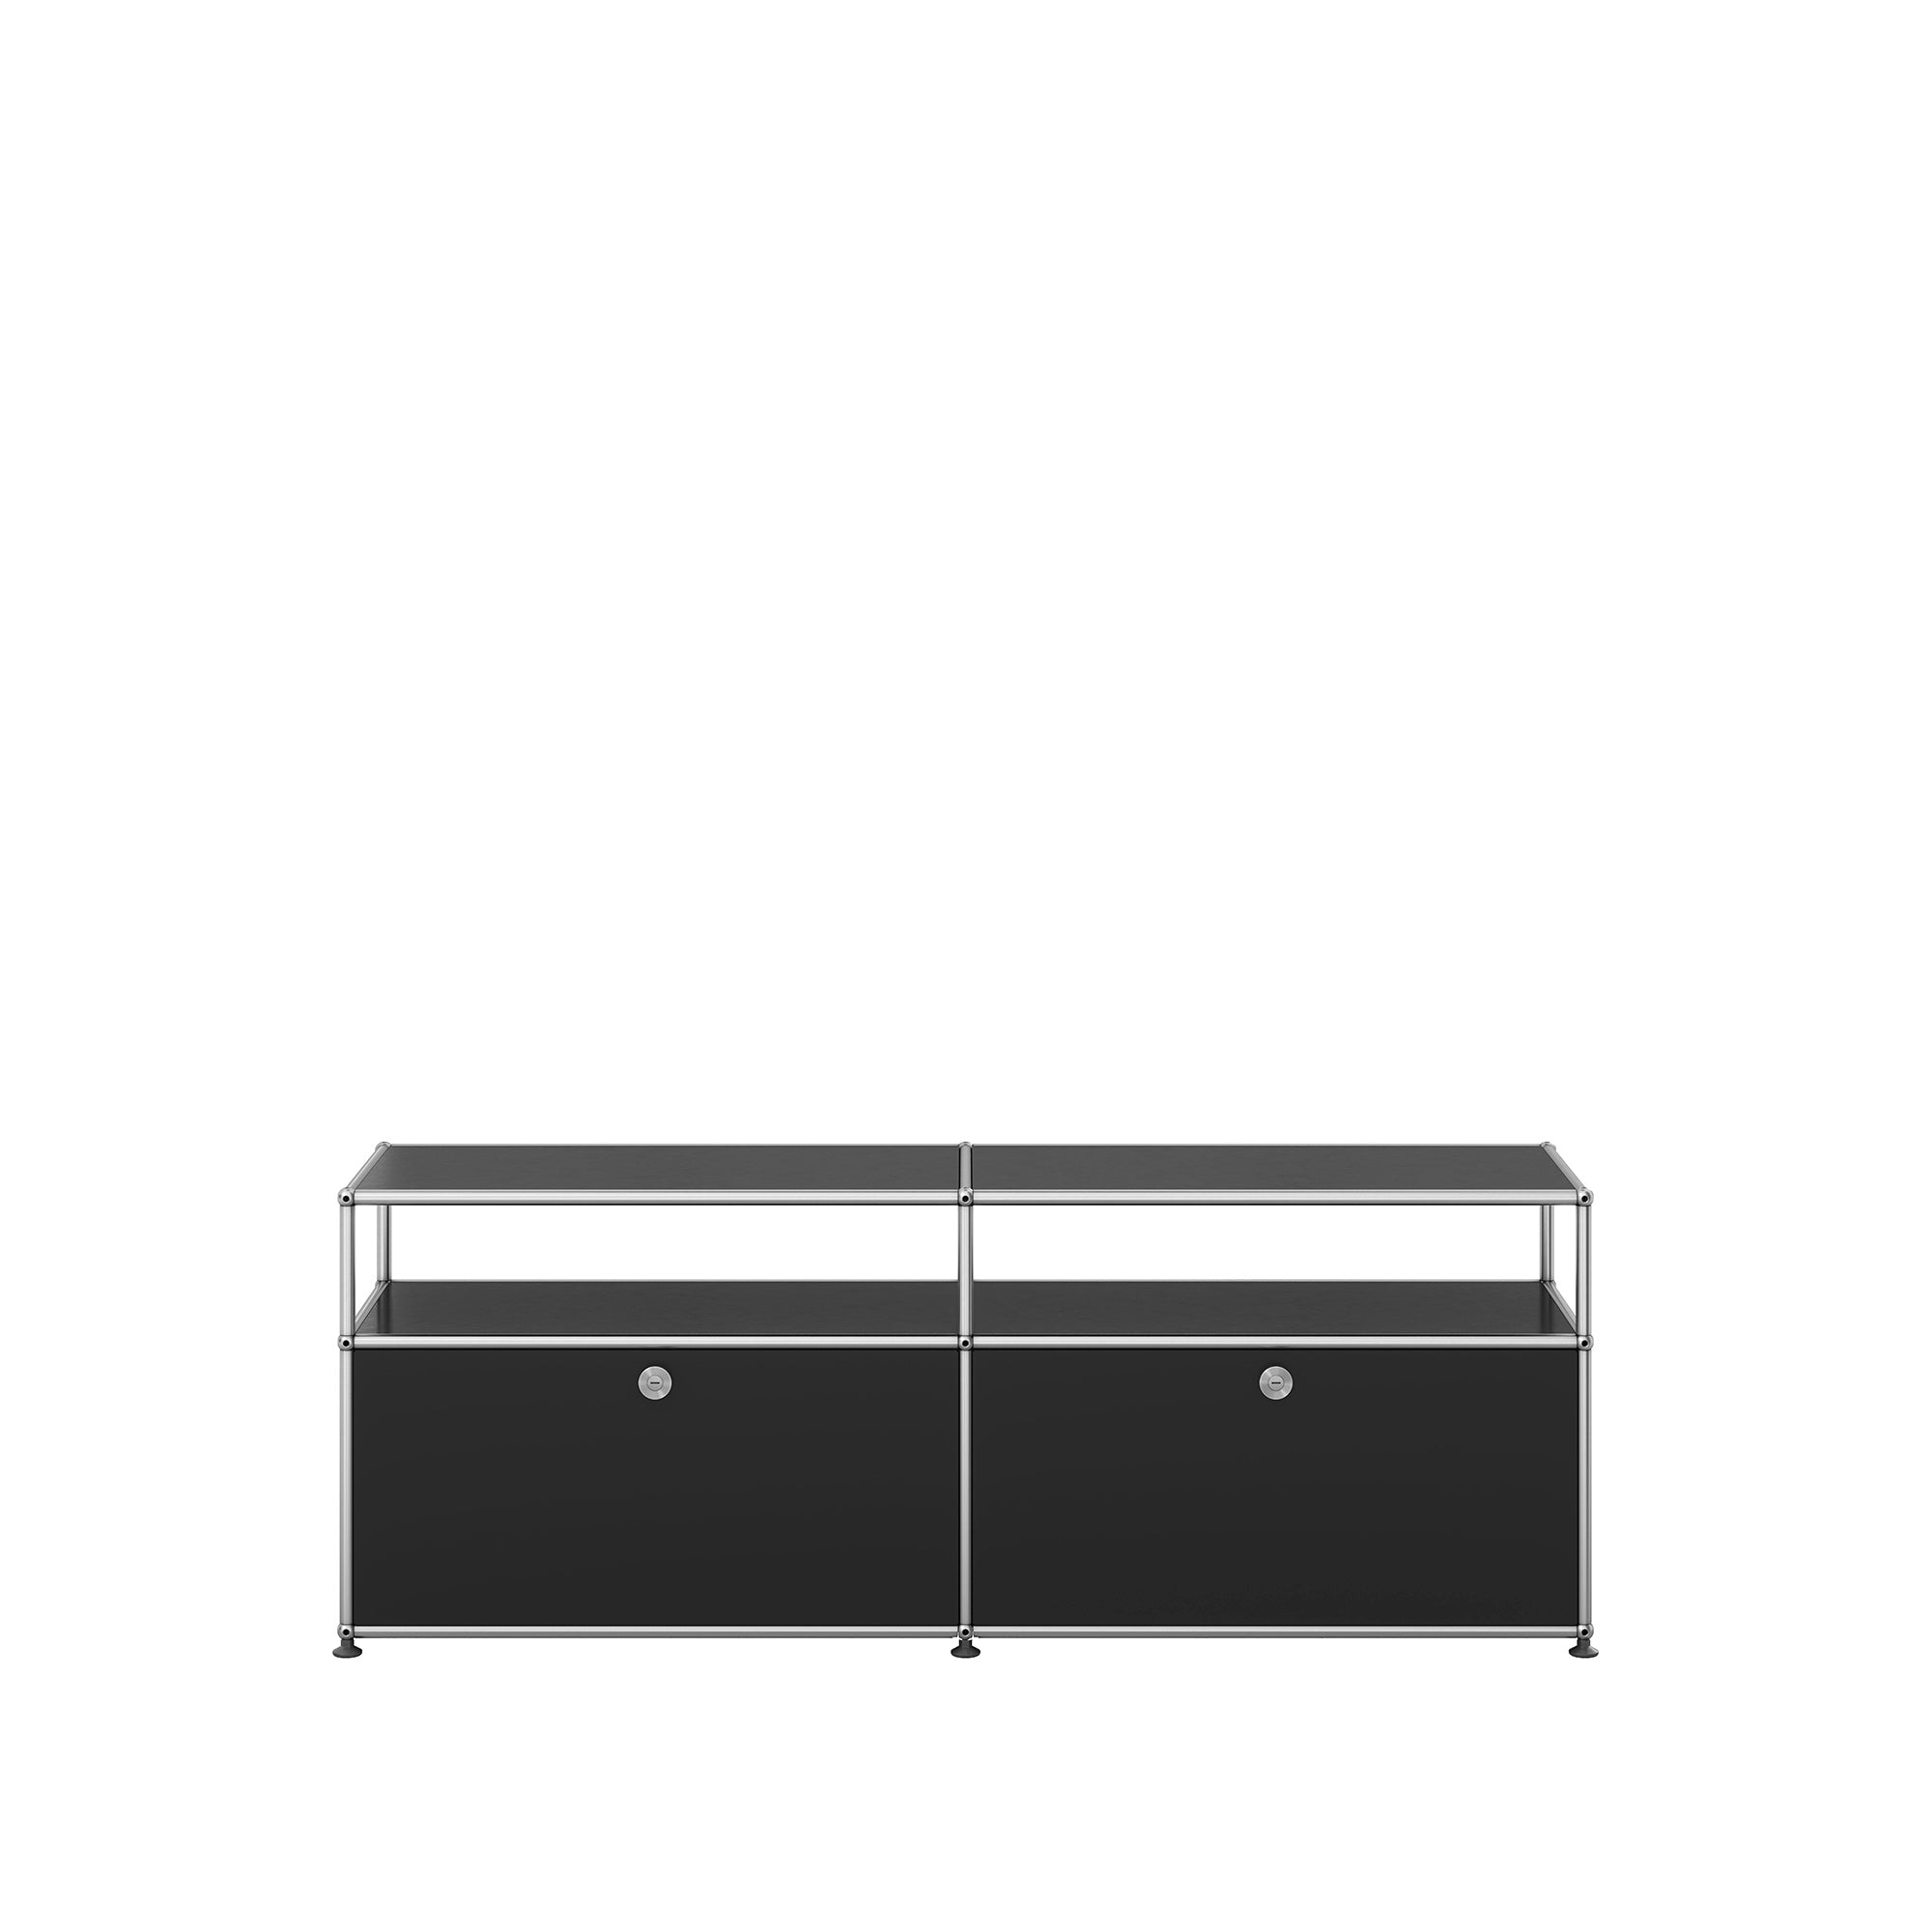 Haller cabinet modular config. 6